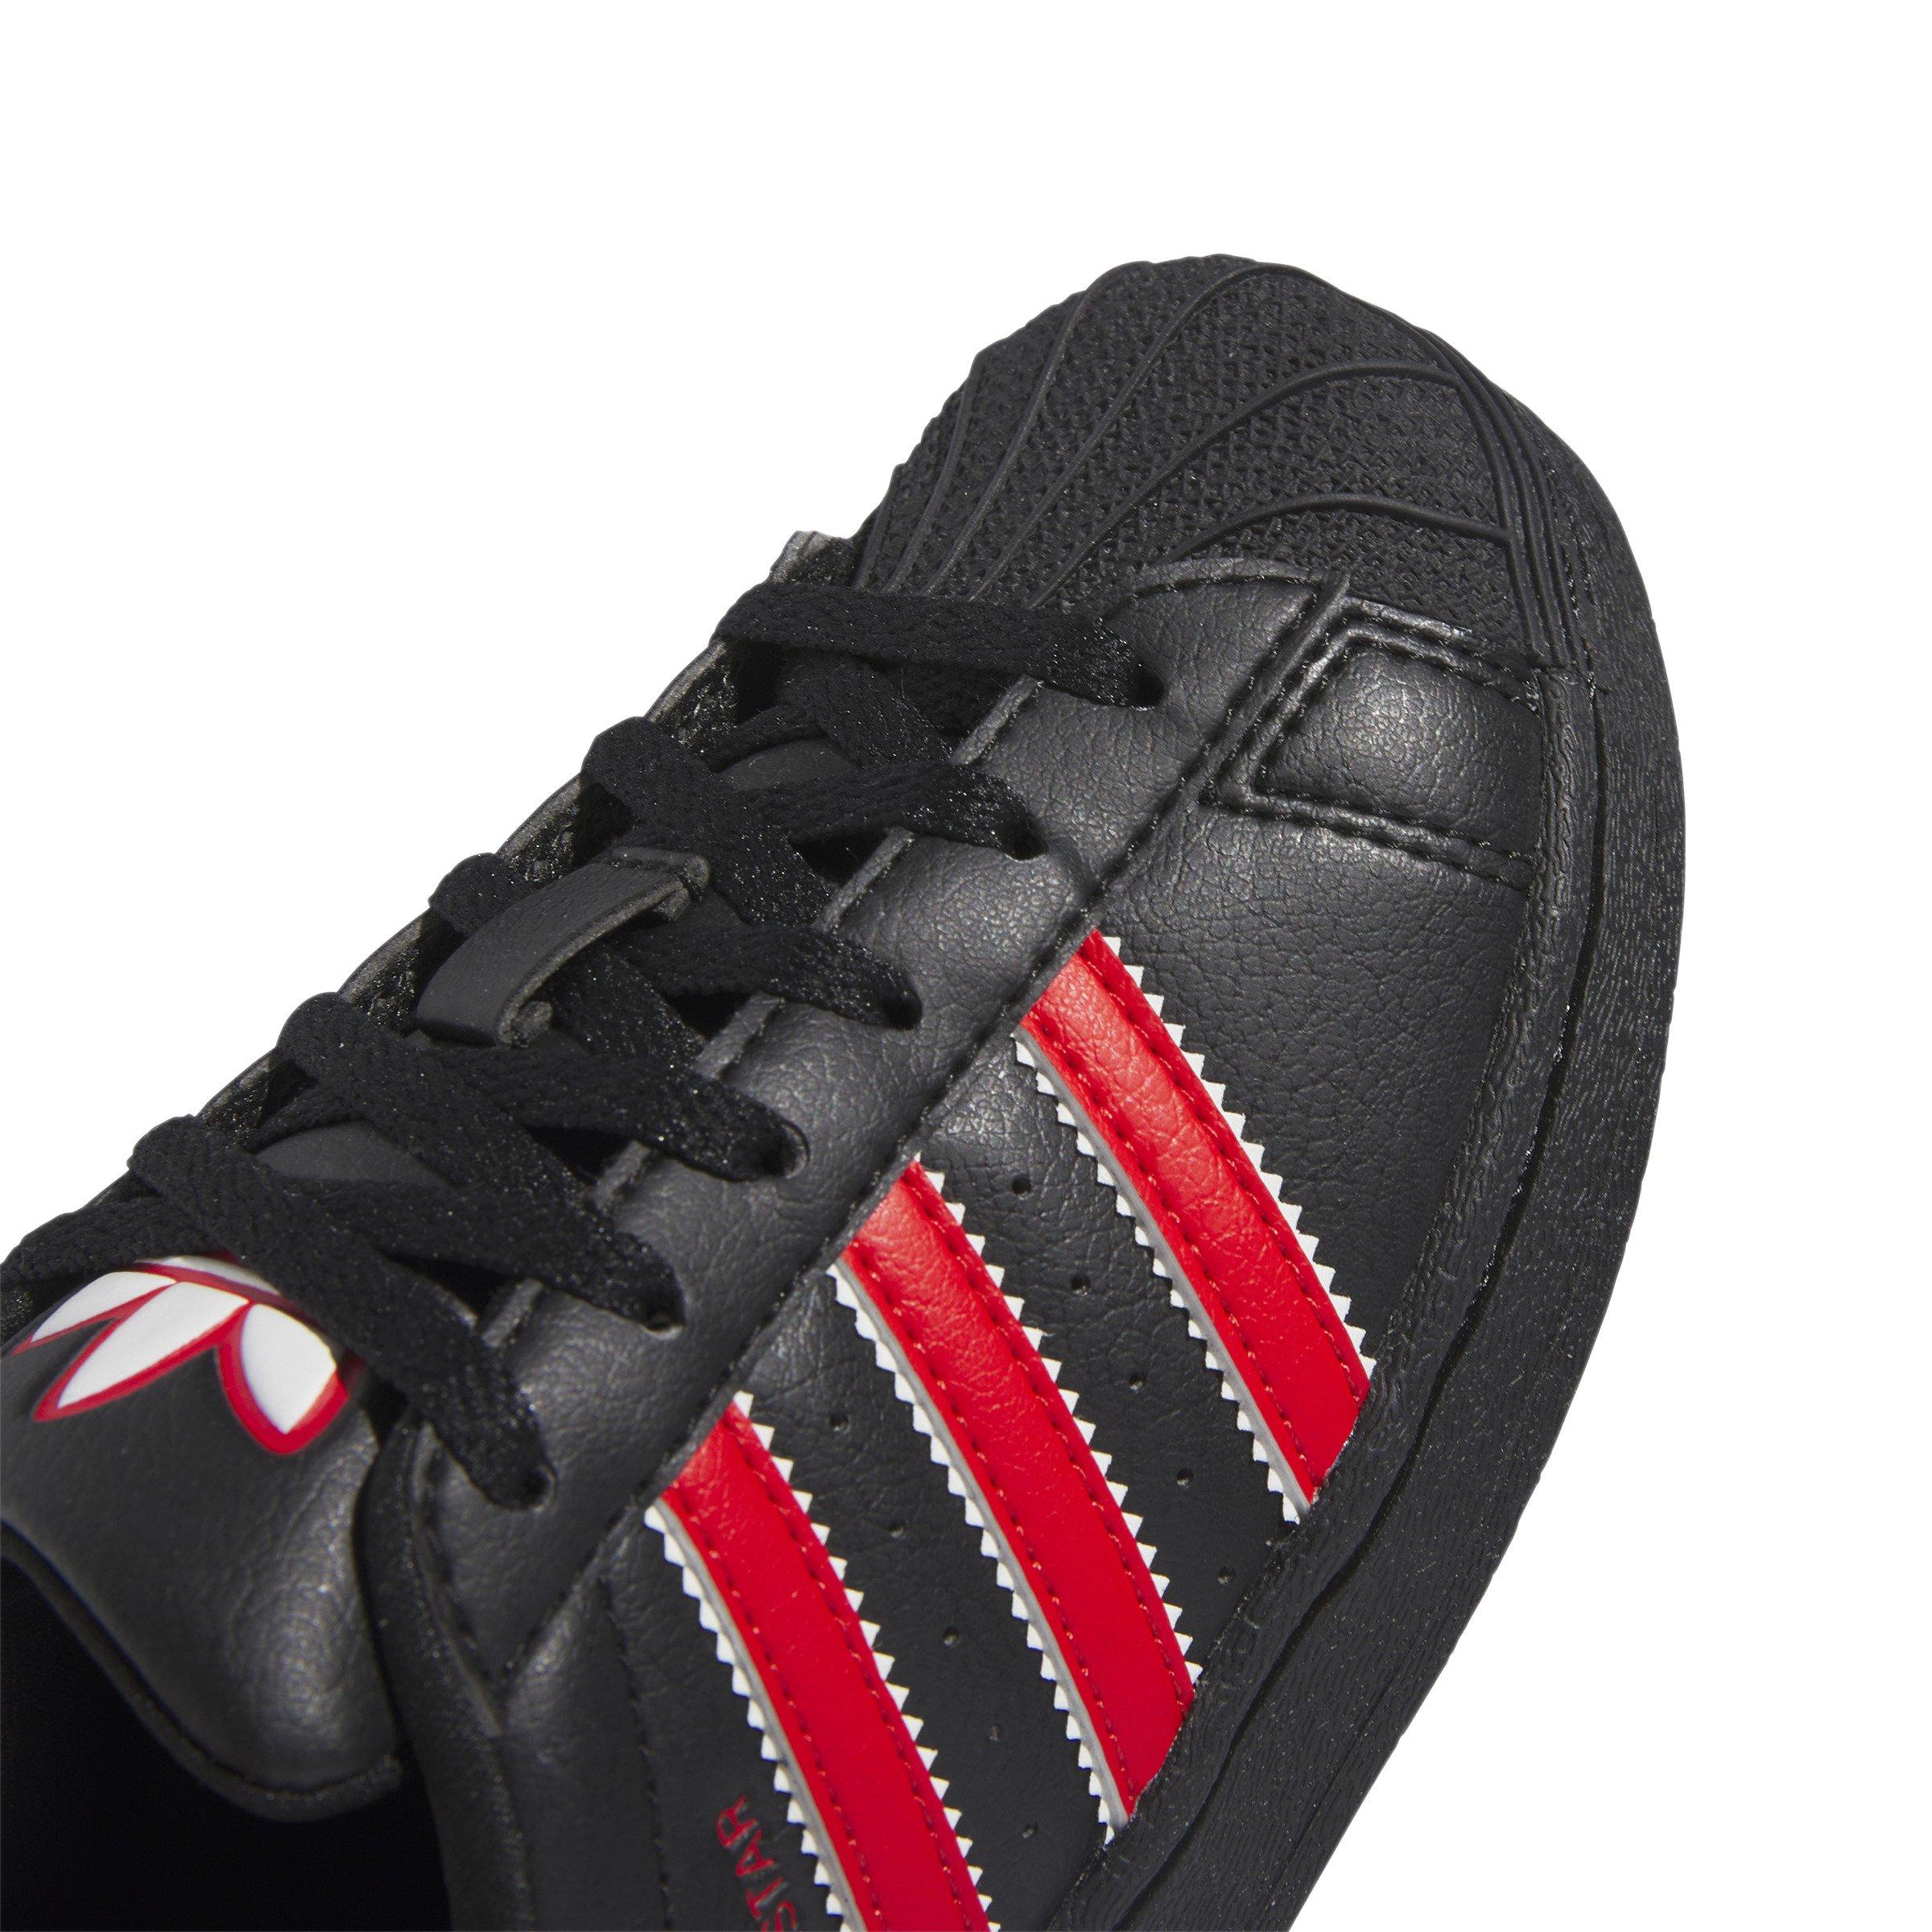 adidas Superstar Core Black/White Men's Shoe - Hibbett